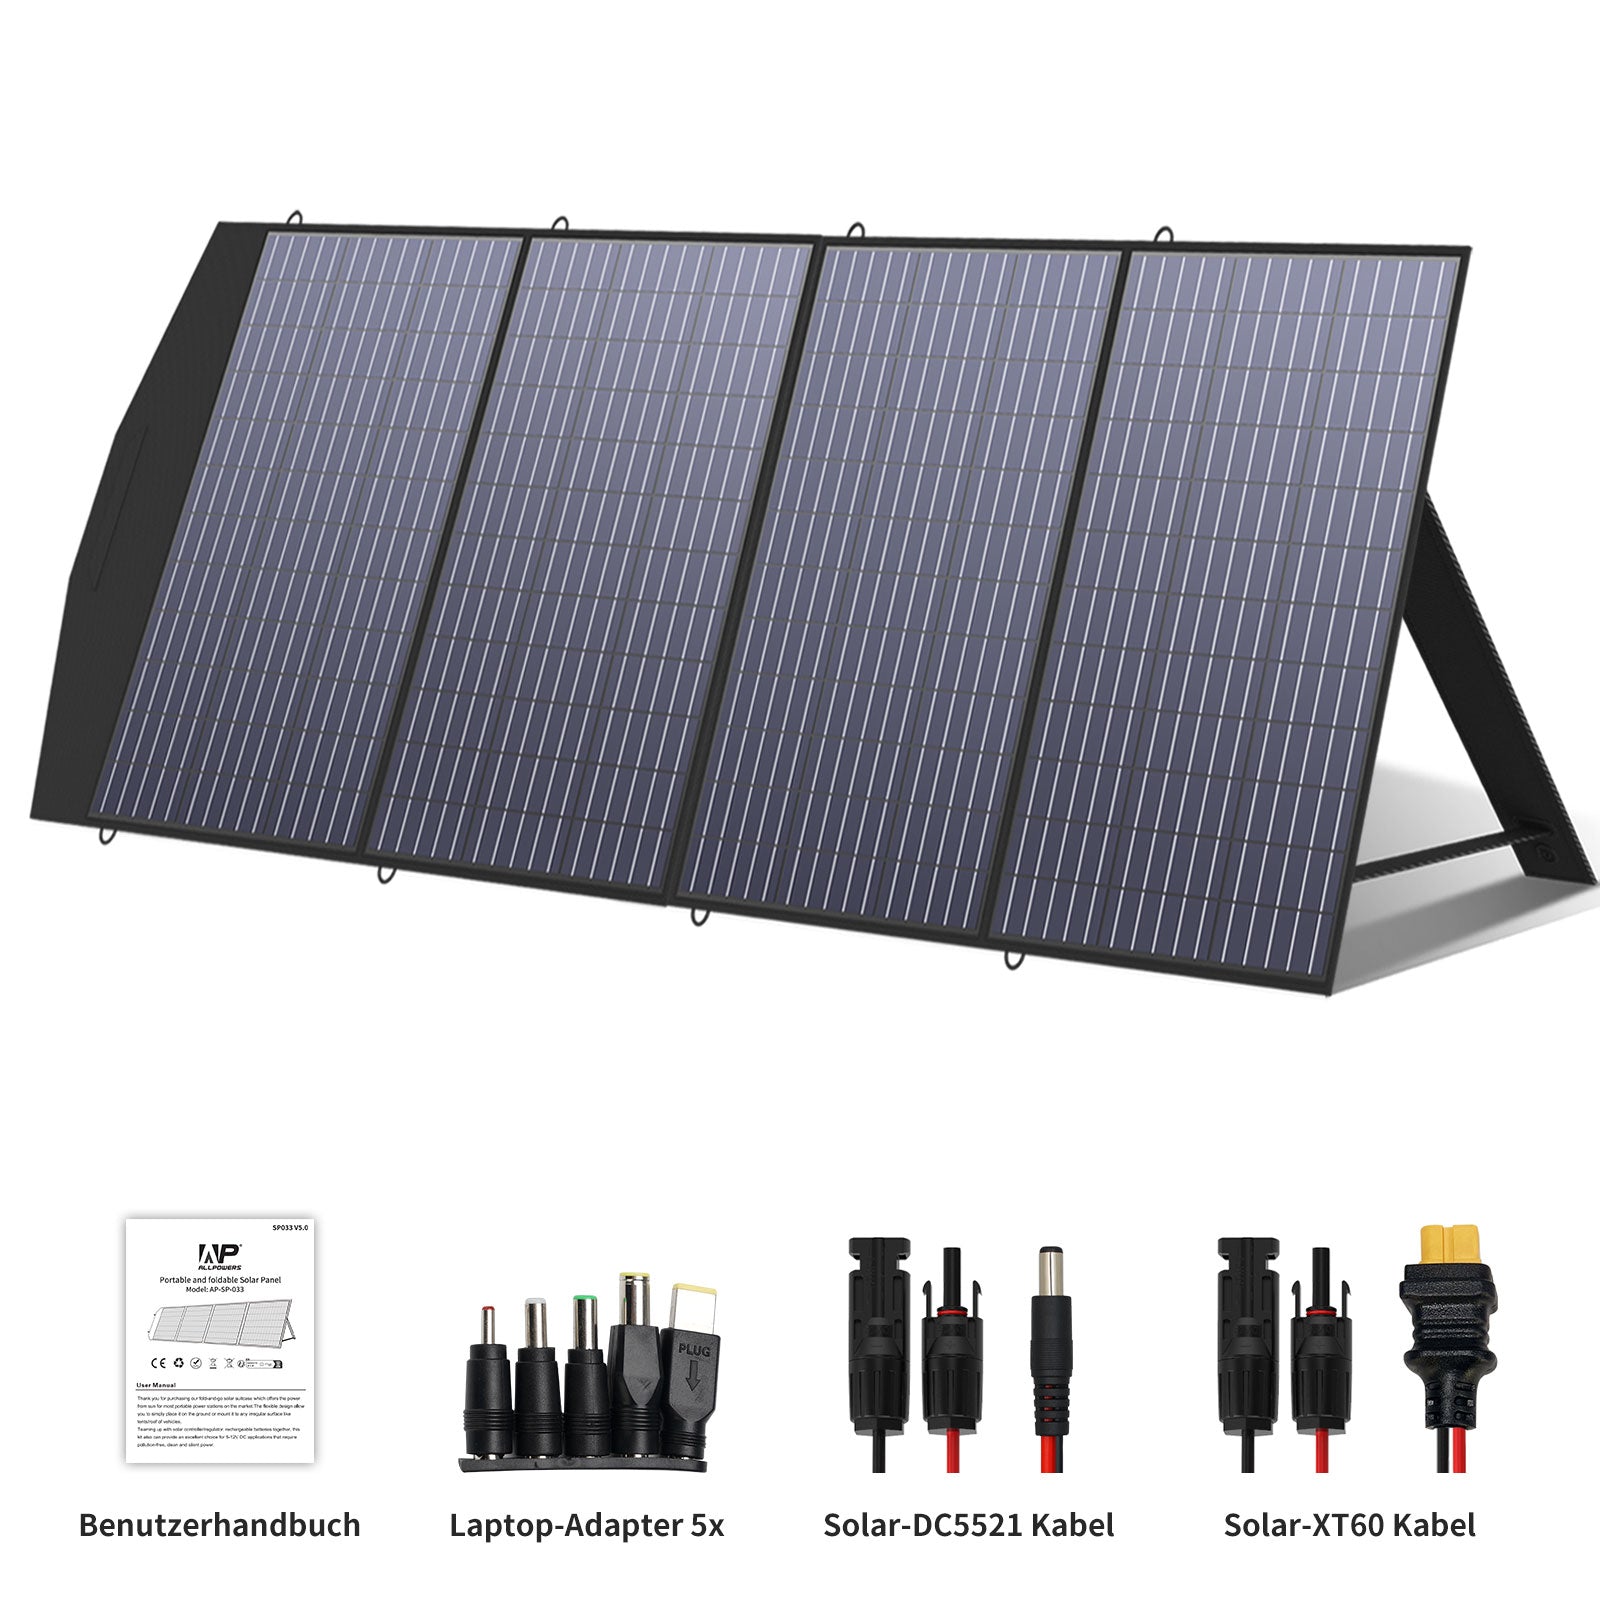 sp033-solar-panel-included-de-1600.jpg